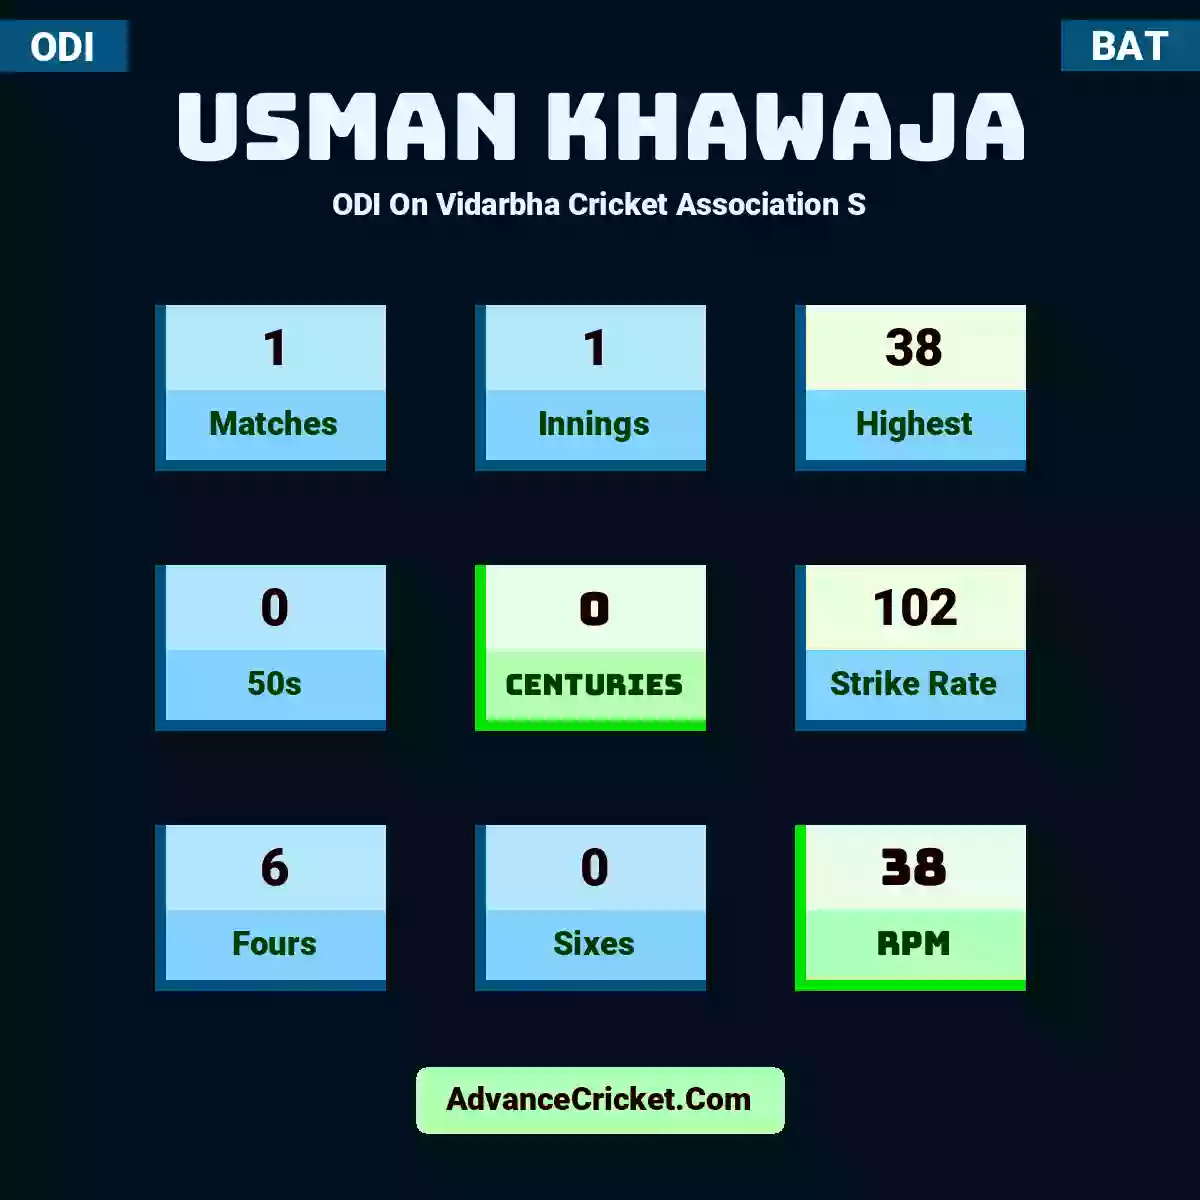 Usman Khawaja ODI  On Vidarbha Cricket Association S, Usman Khawaja played 1 matches, scored 38 runs as highest, 0 half-centuries, and 0 centuries, with a strike rate of 102. U.Khawaja hit 6 fours and 0 sixes, with an RPM of 38.